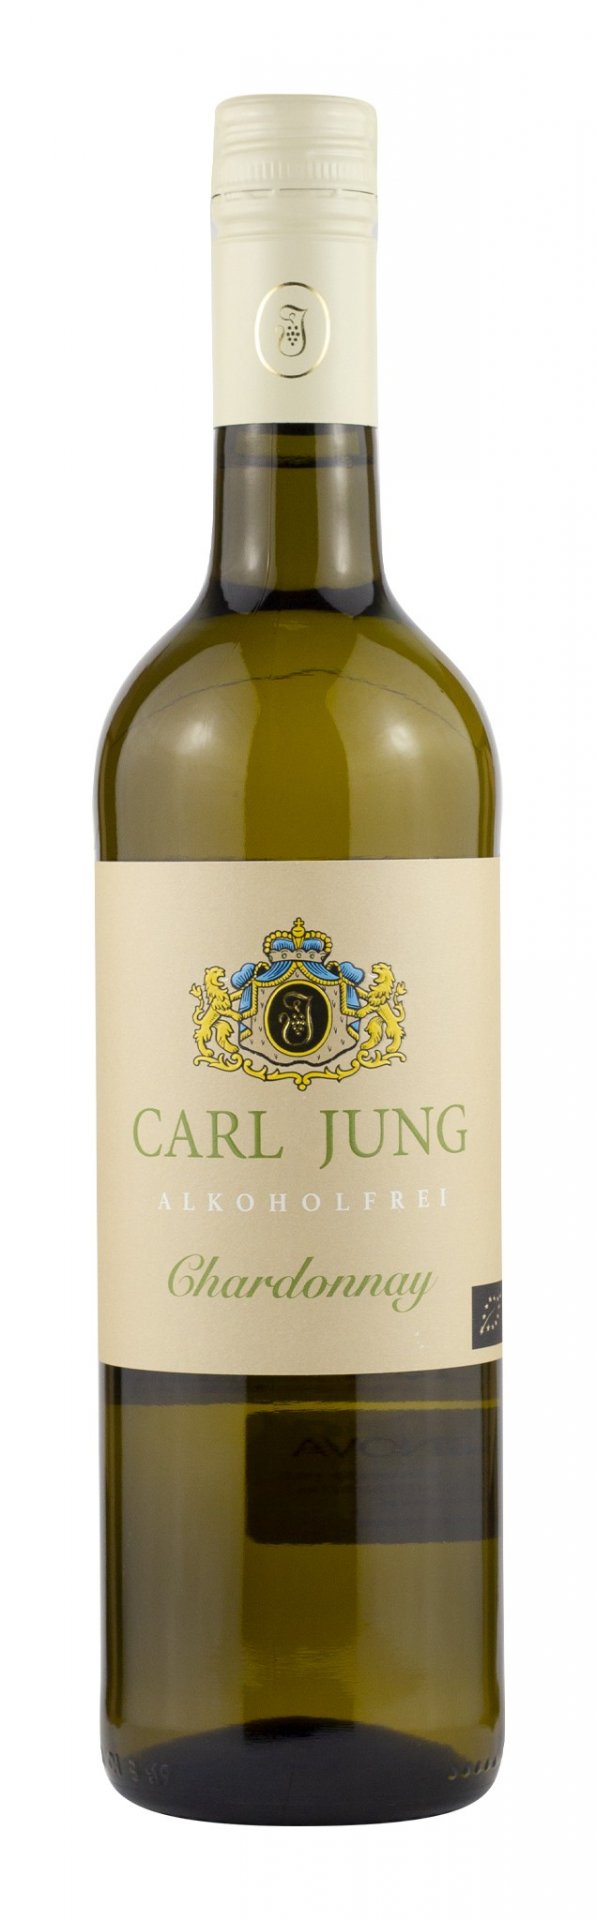 Carl Jung Chardonnay Bio & Vegan Alcohol-free